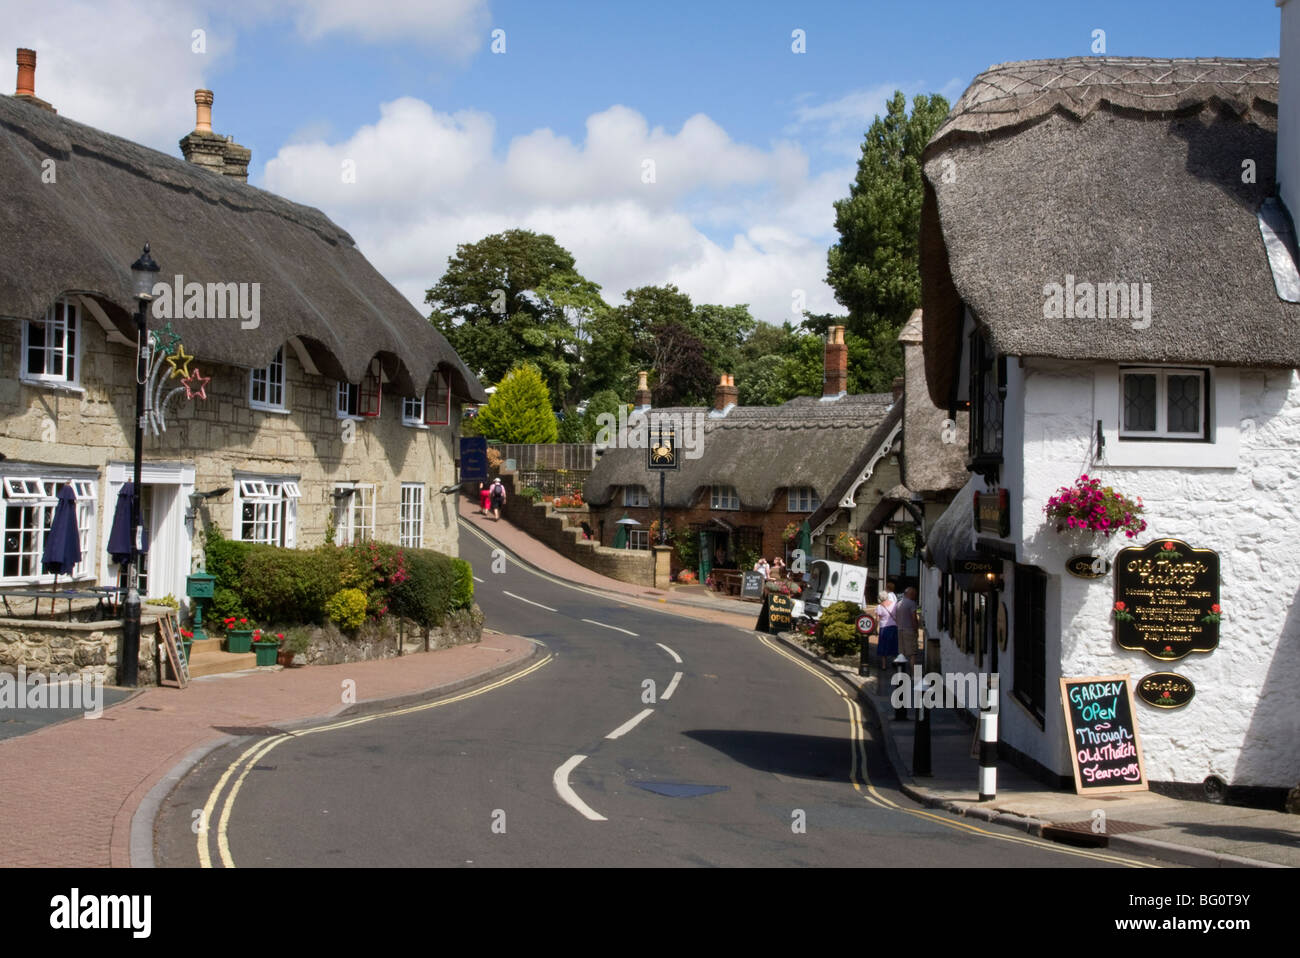 Thatched houses, teashop and pub, Shanklin, Isle of Wight, England, United Kingdom, Europe Stock Photo